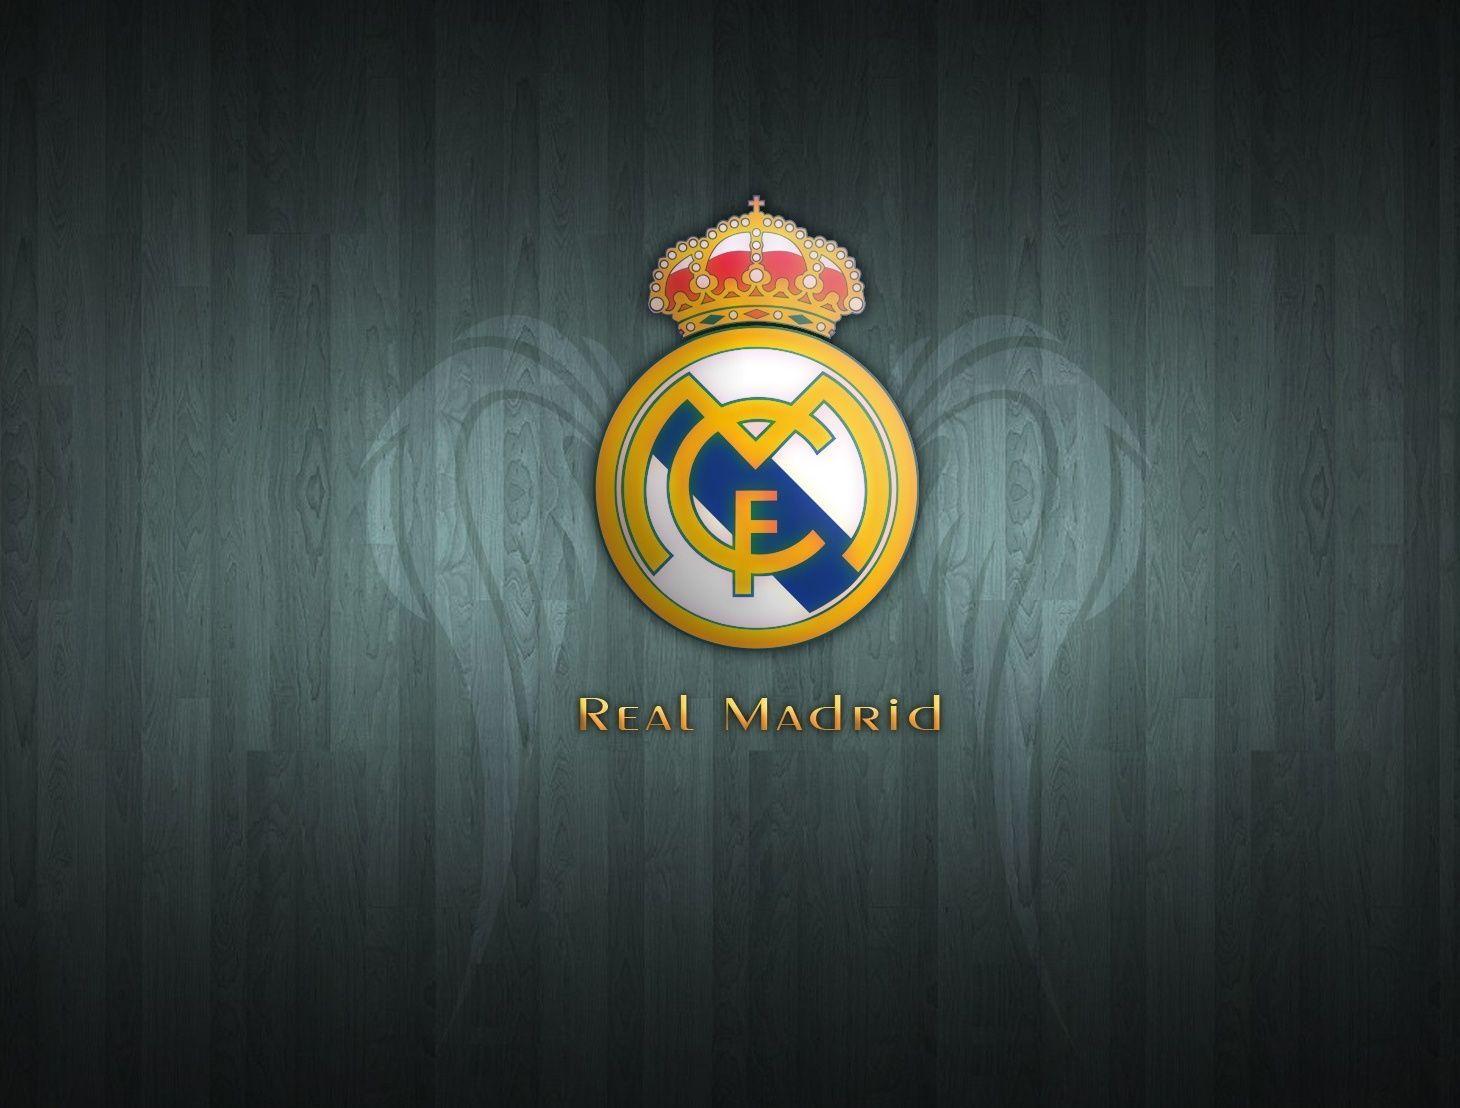 Real Madrid Club De Fútbol Madrid España Wallpaper Wallpaper HD. Real madrid wallpaper, Real madrid logo wallpaper, Madrid wallpaper